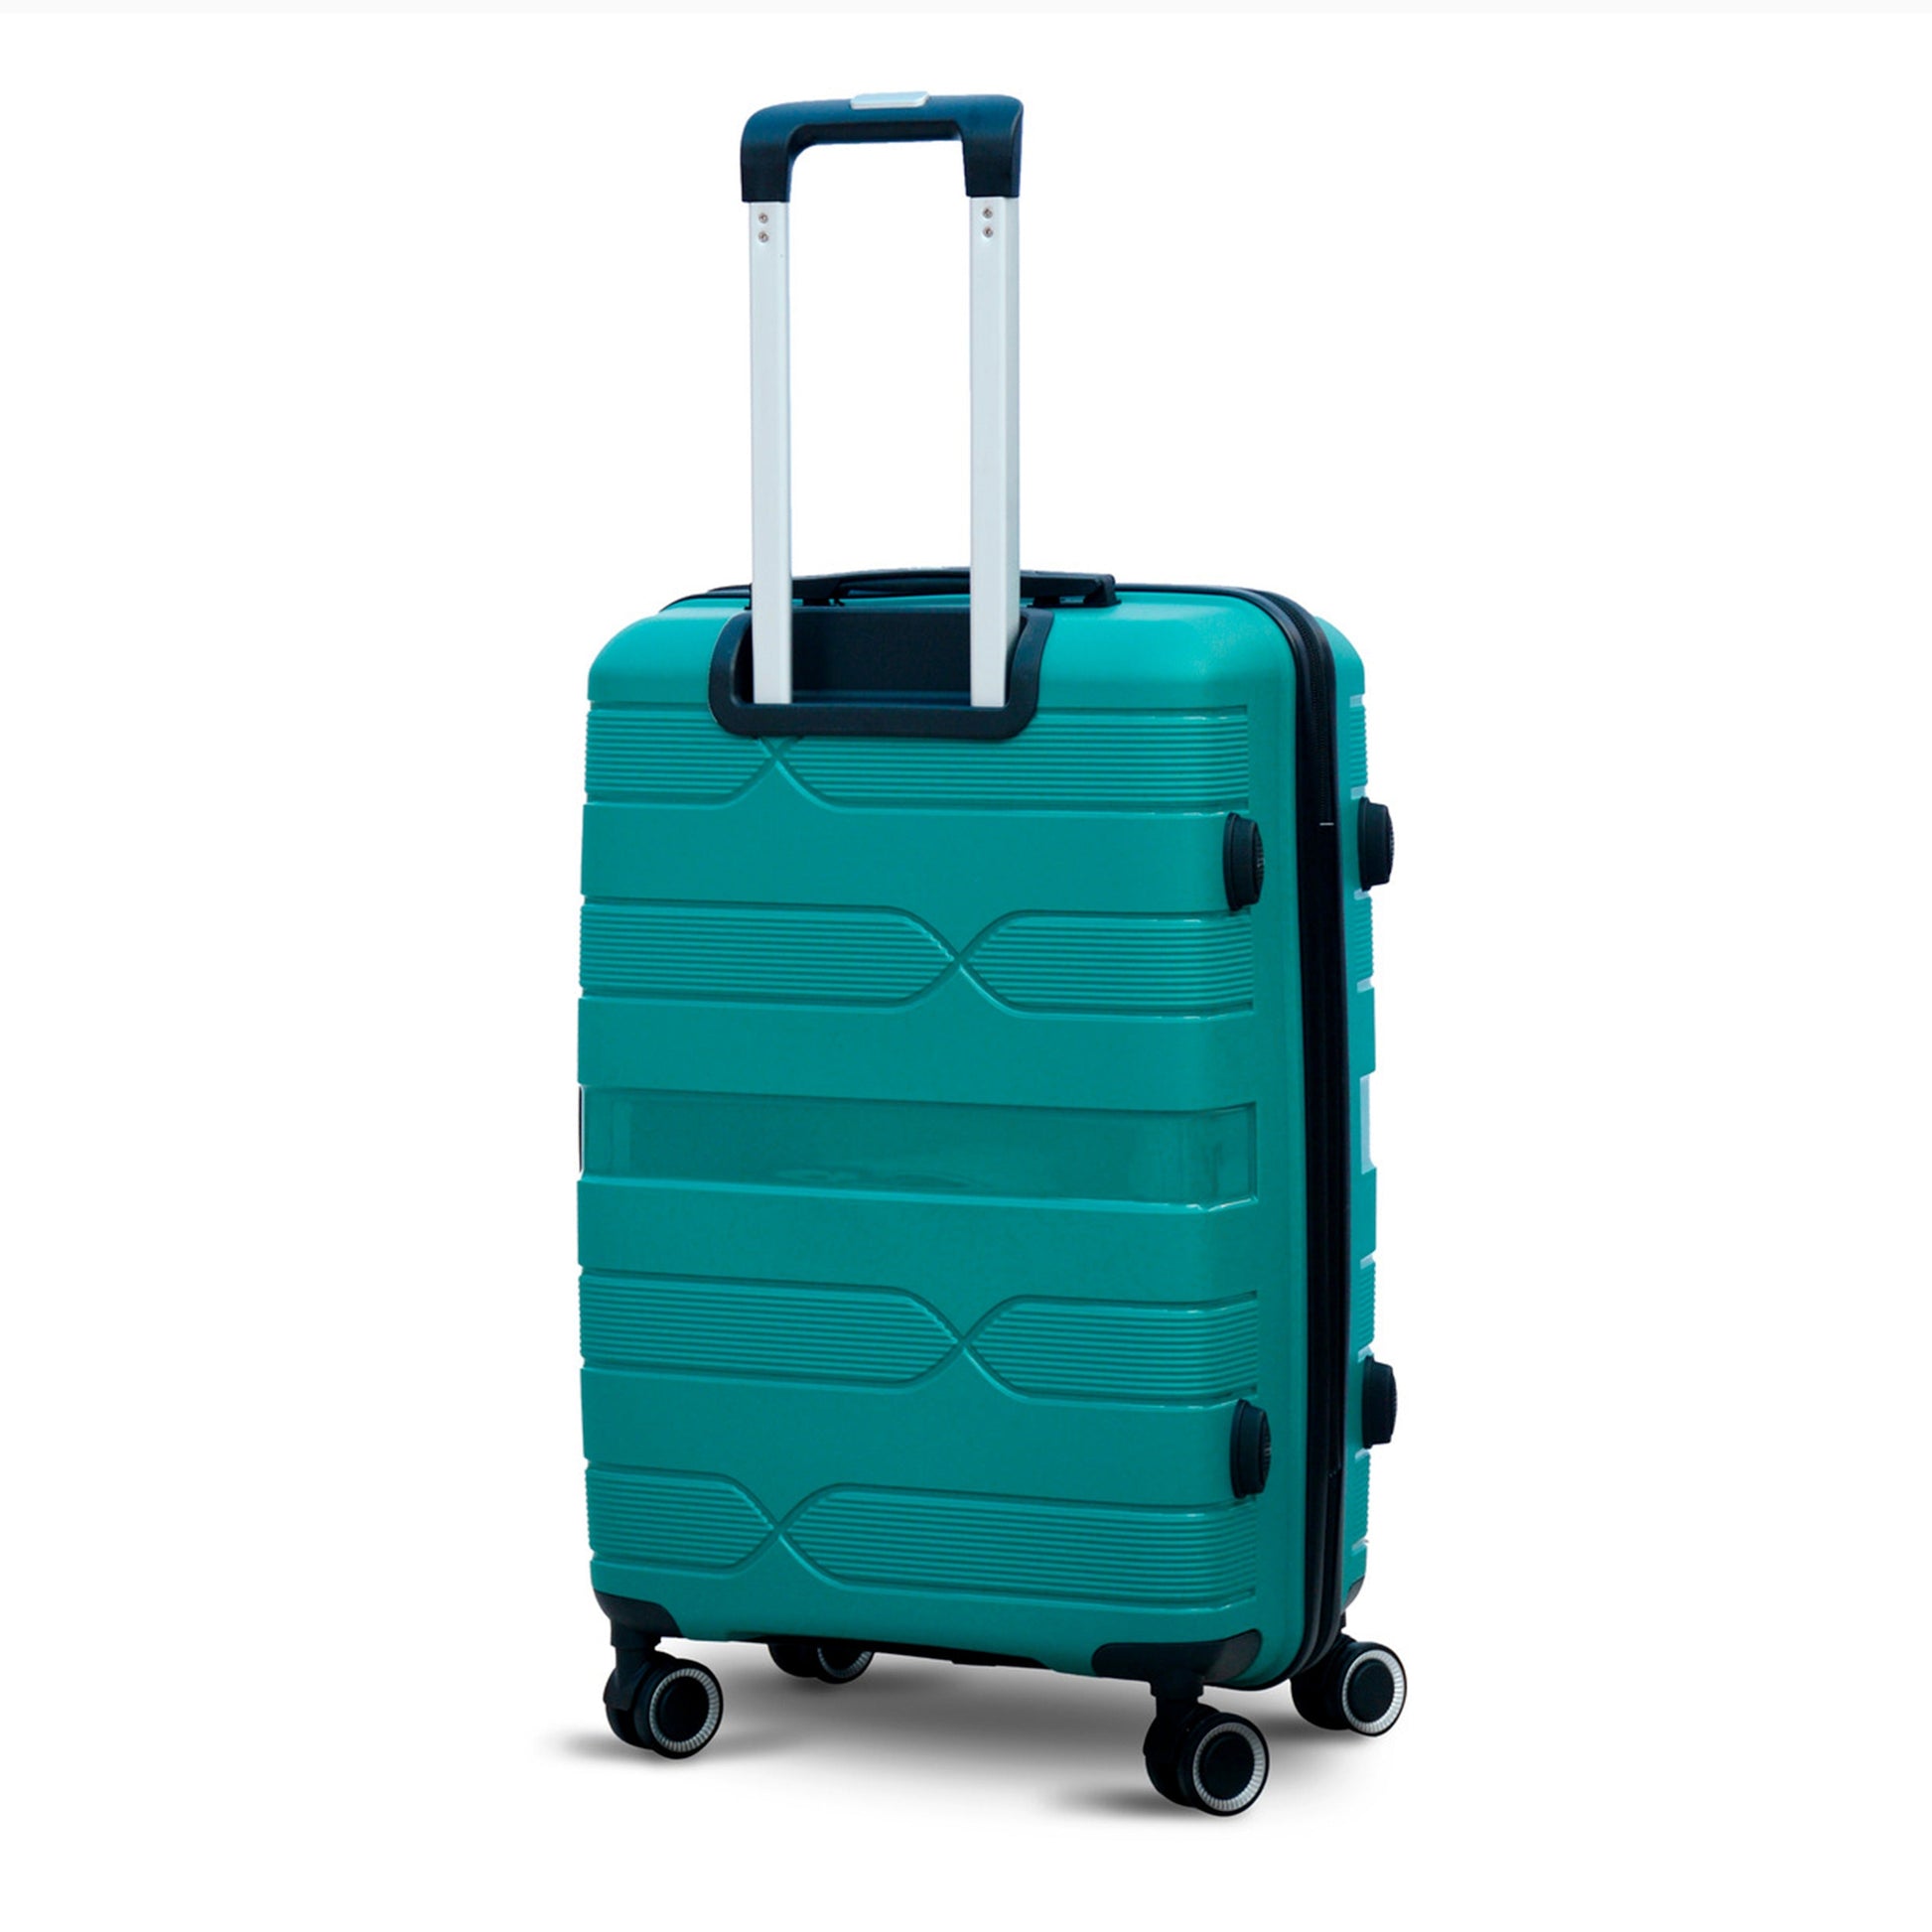 20” Paris Fashion Lightweight PP Luggage Light Green Colour | Hard case Spinner Wheel Trolley Bag zaappy.com